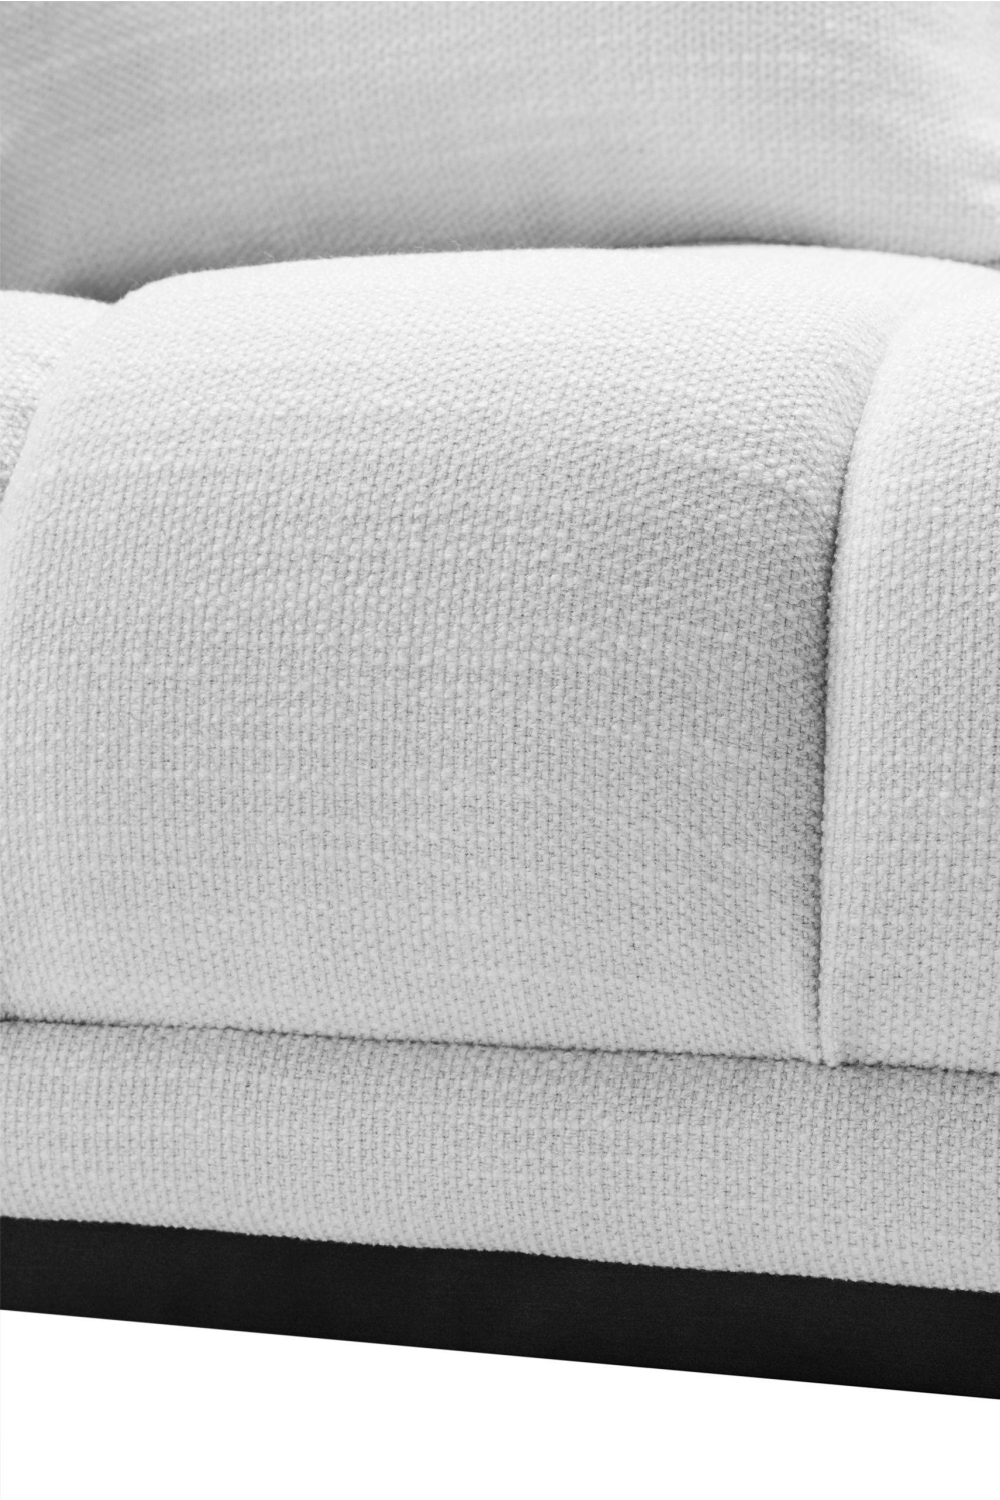 White Tufted Accent Chair | Eichholtz Aurelio | Oroa.com